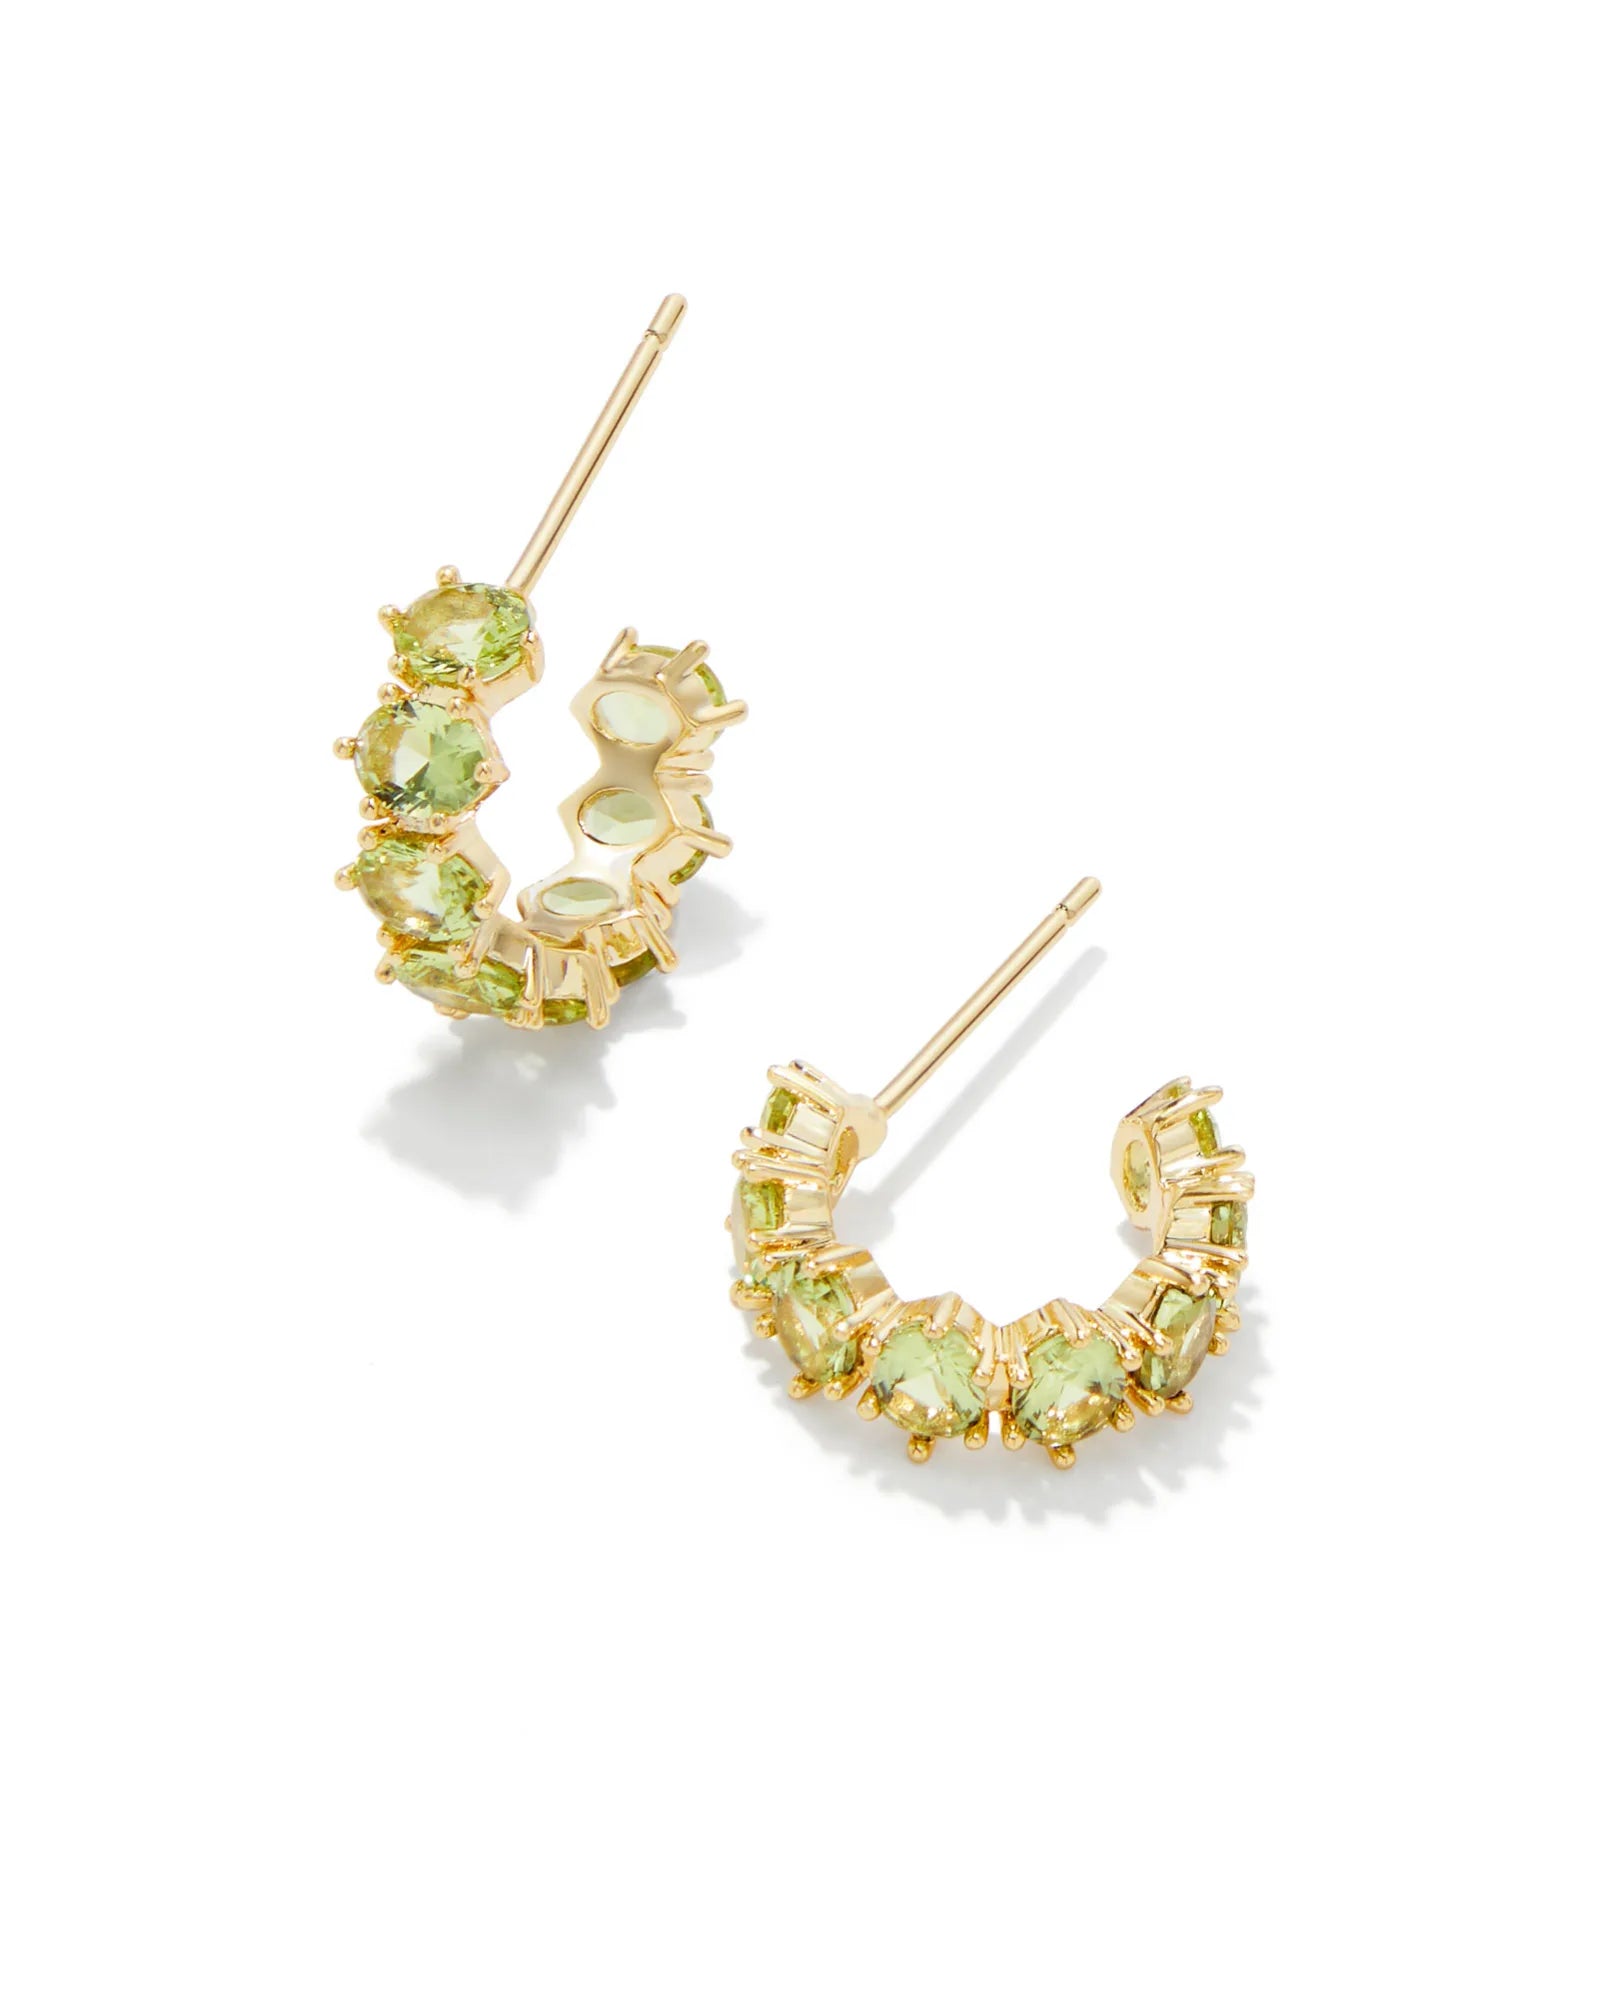 KENDRA SCOTT- Cailin Gold Crystal Huggie Earrings in Peridot Crystal